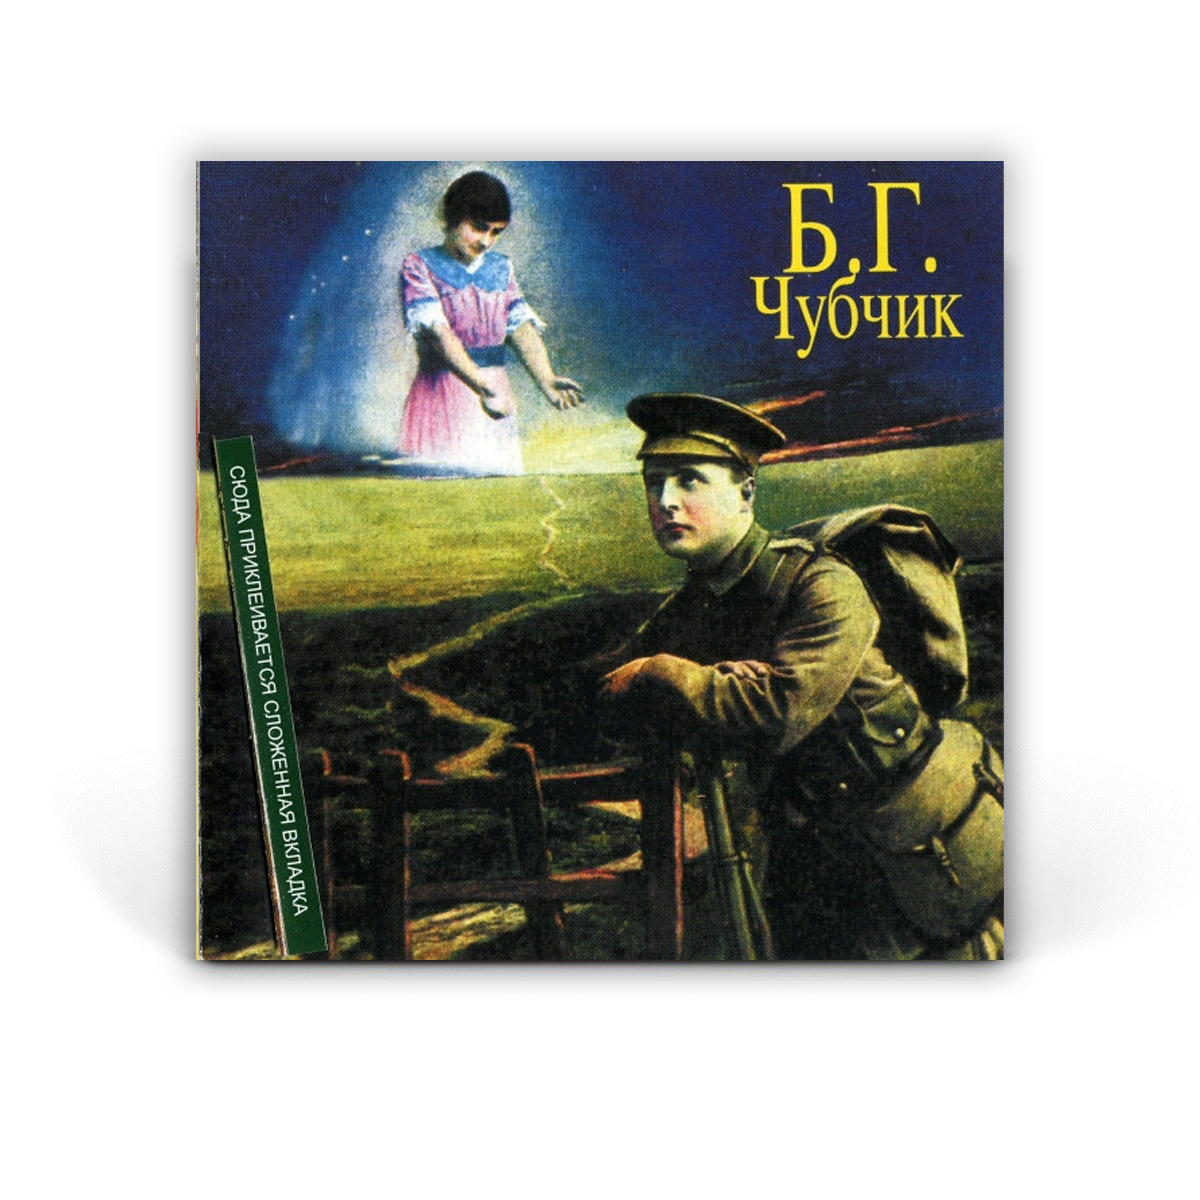 Компакт диск CD: Б.Г. — Чубчик (1996)